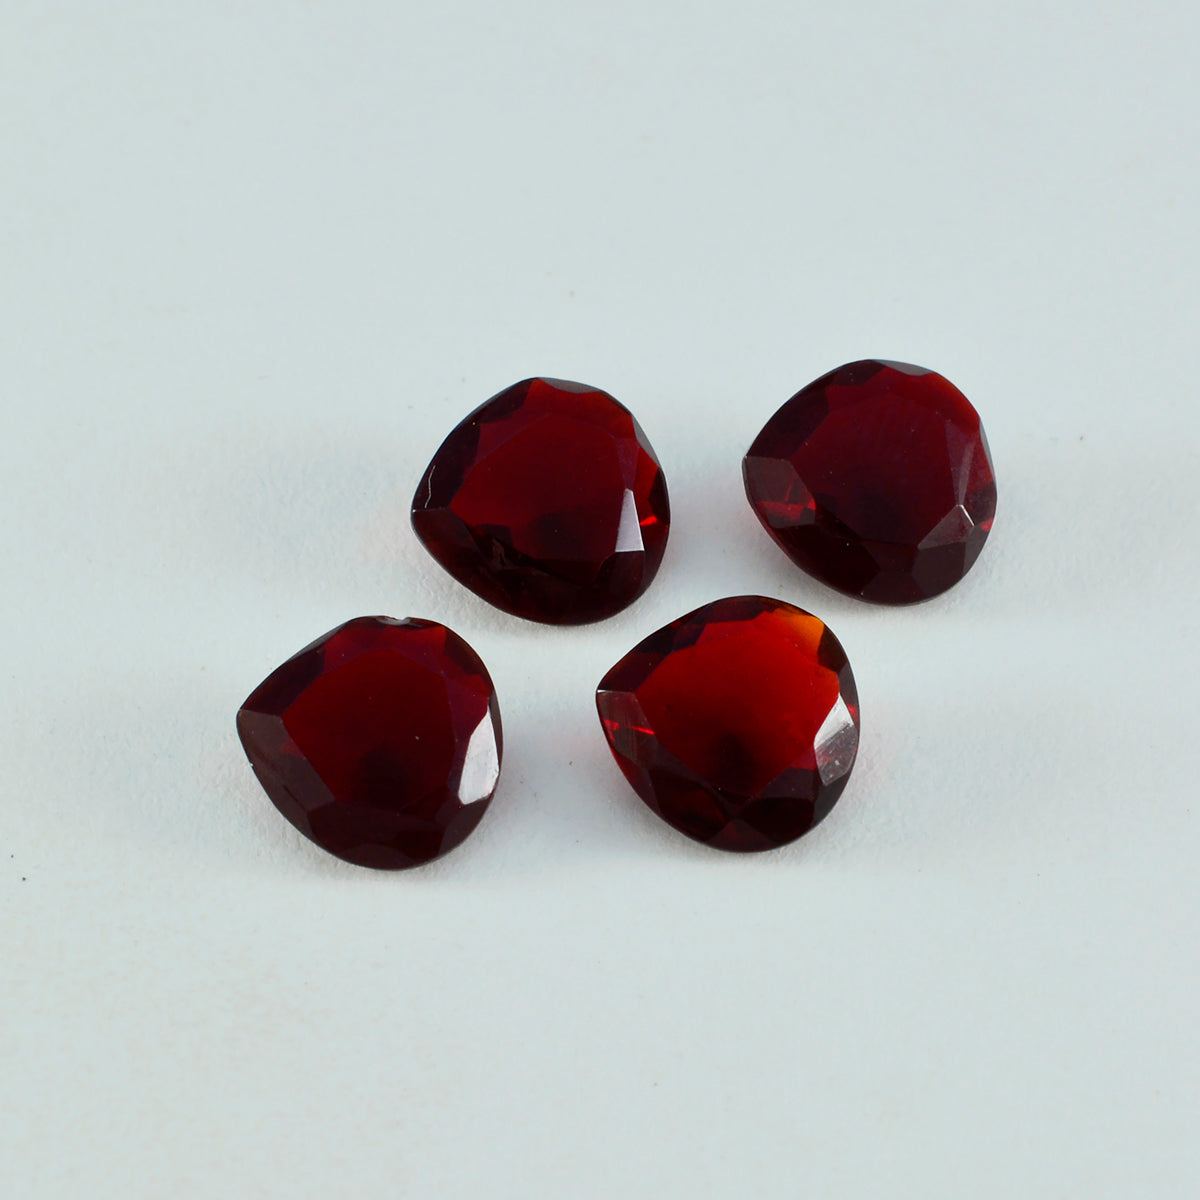 Riyogems 1PC Red Ruby CZ Faceted 11x11 mm Heart Shape amazing Quality Loose Gemstone